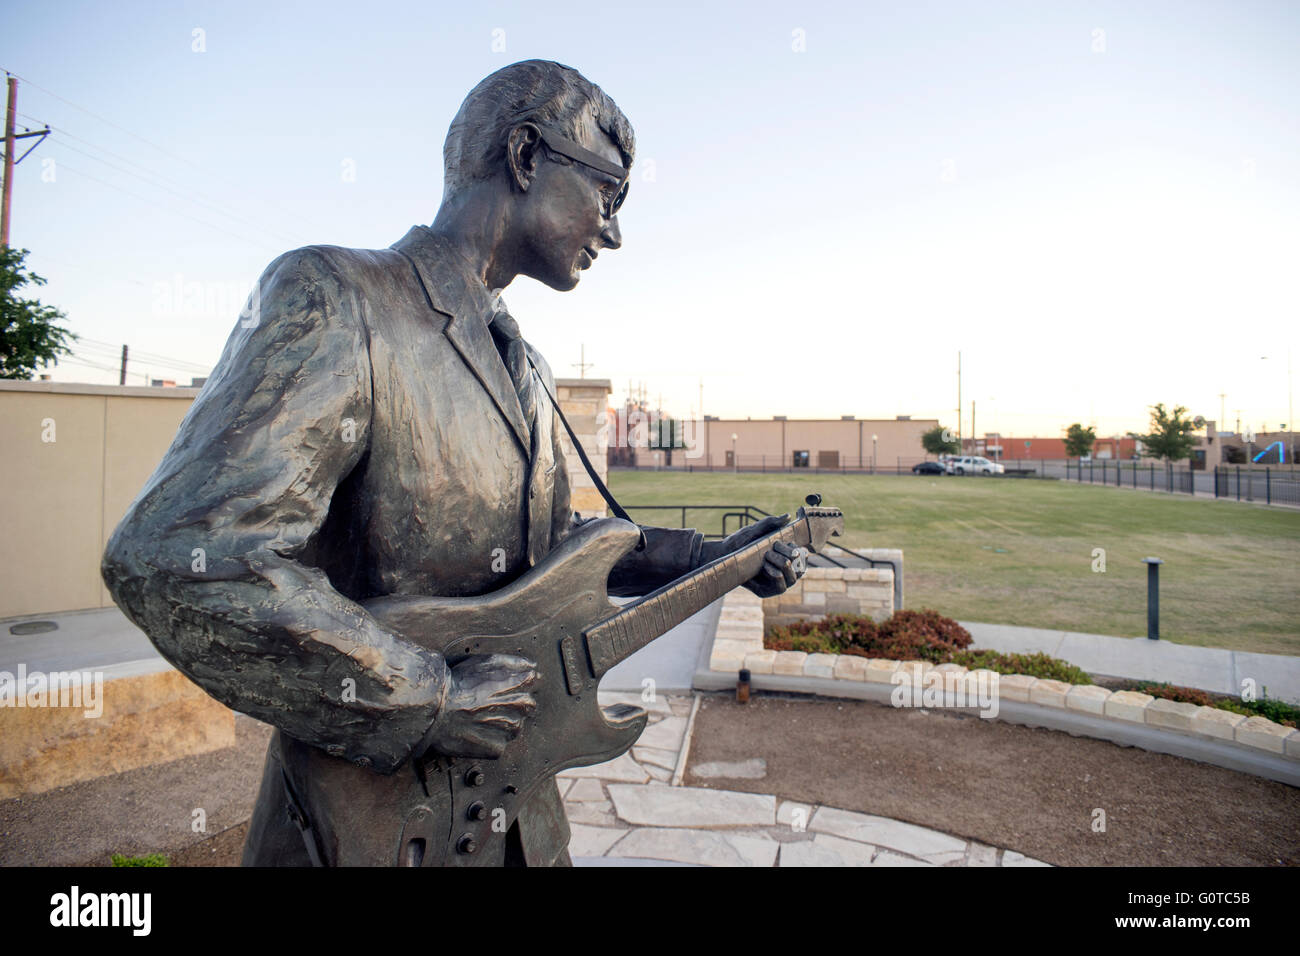 Statue von Buddy Holly in Lubbock, Texas. Charles Hardin Holley (7. September 1936 – 3. Februar 1959), bekannt als Buddy Holly. Stockfoto